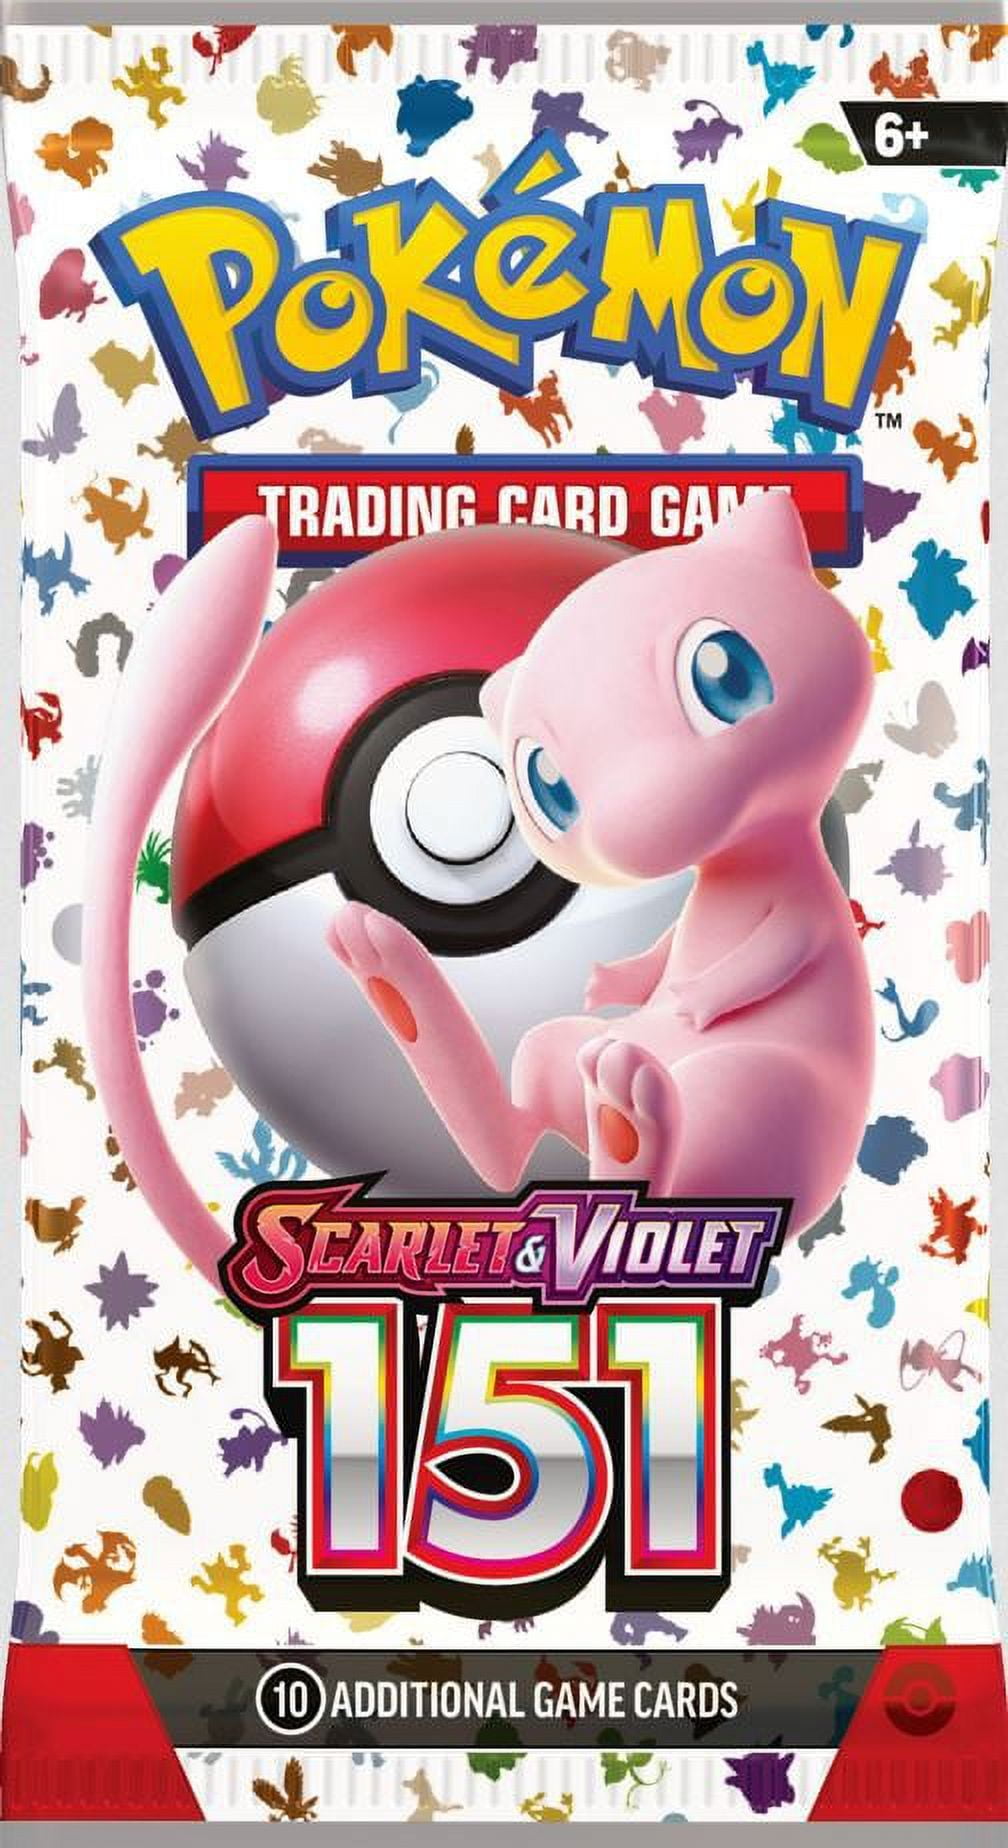 PSL Pokemon Card Scarlet & Violet Pokemon Card 151 Booster Box